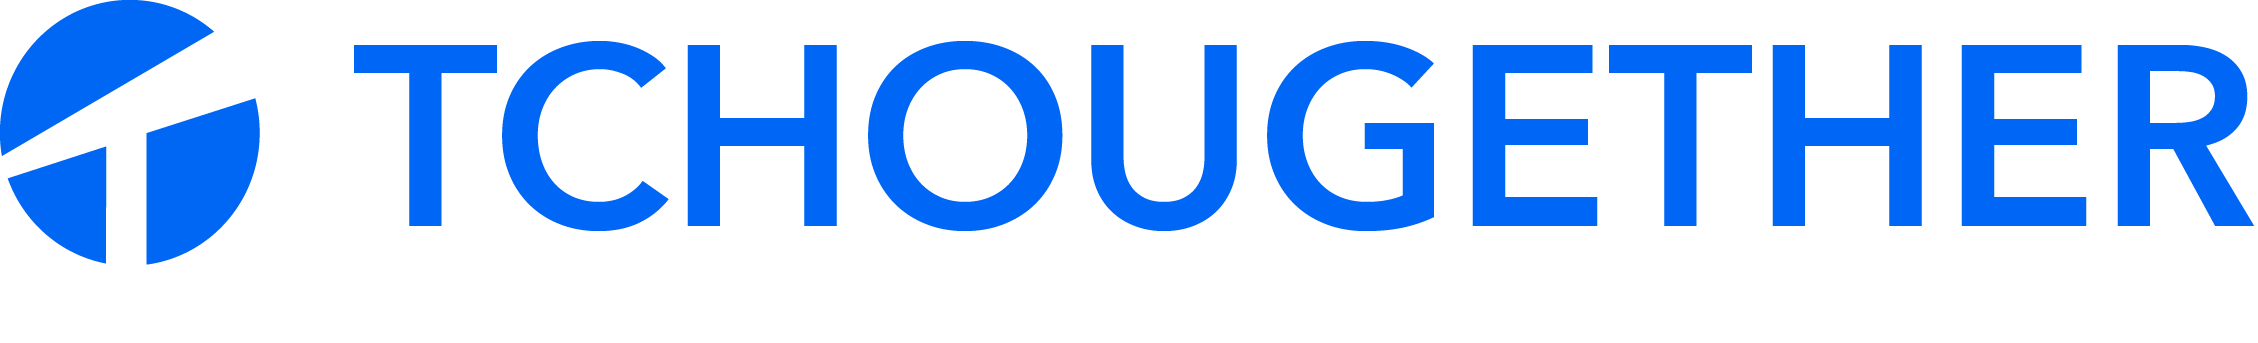 tchougether logo